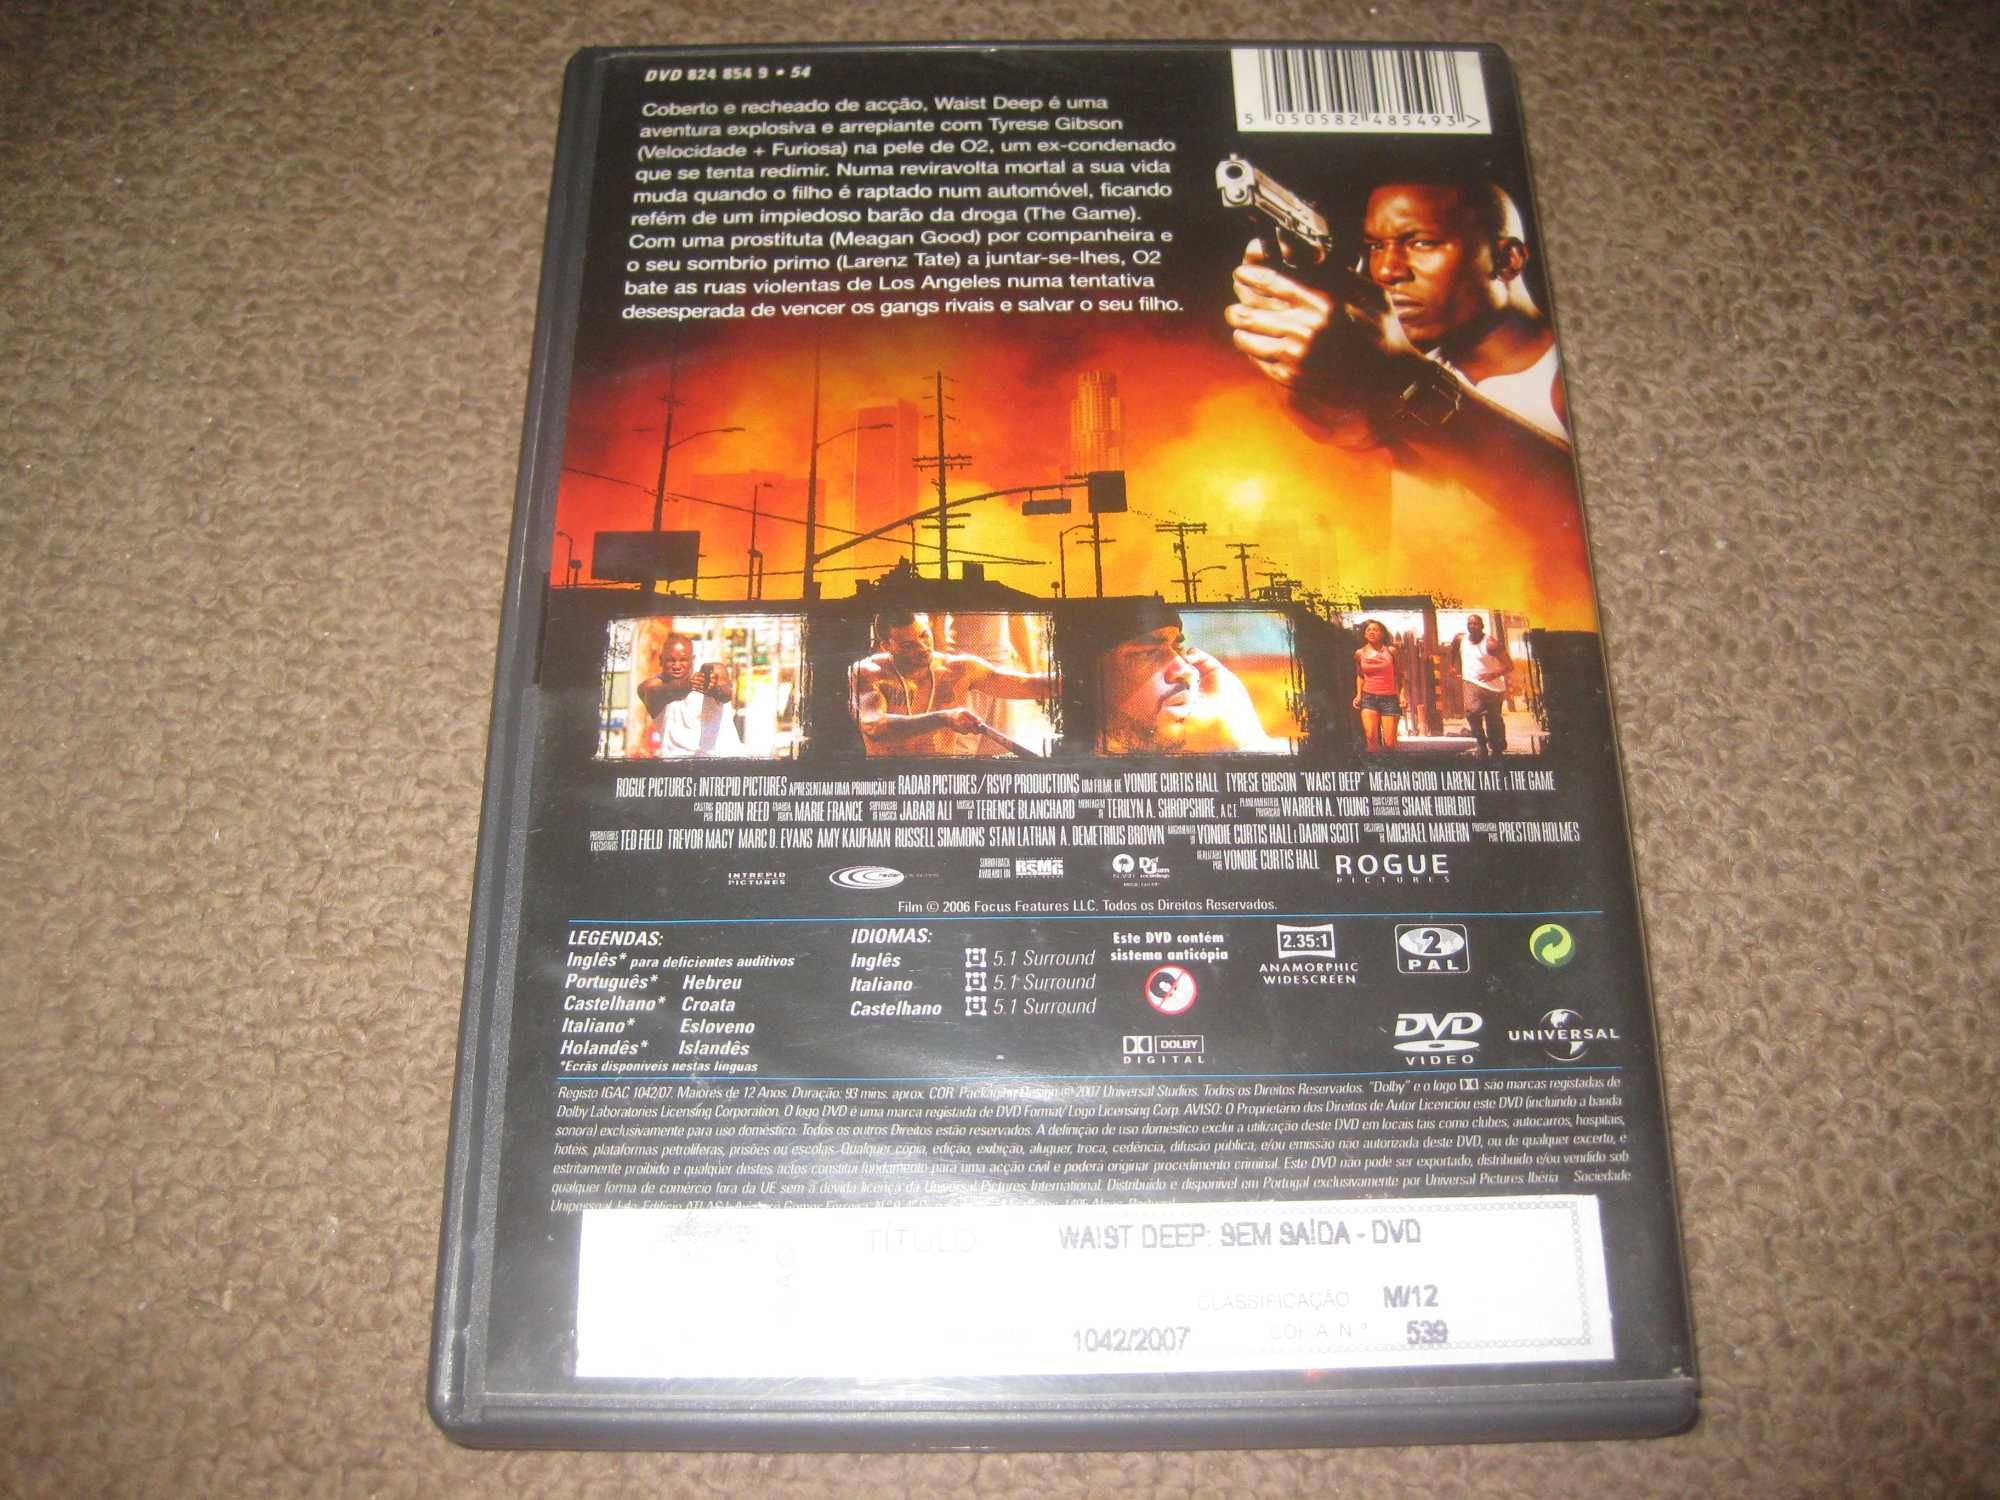 DVD "Waist Deep: Sem Saída" com Tyrese Gibson